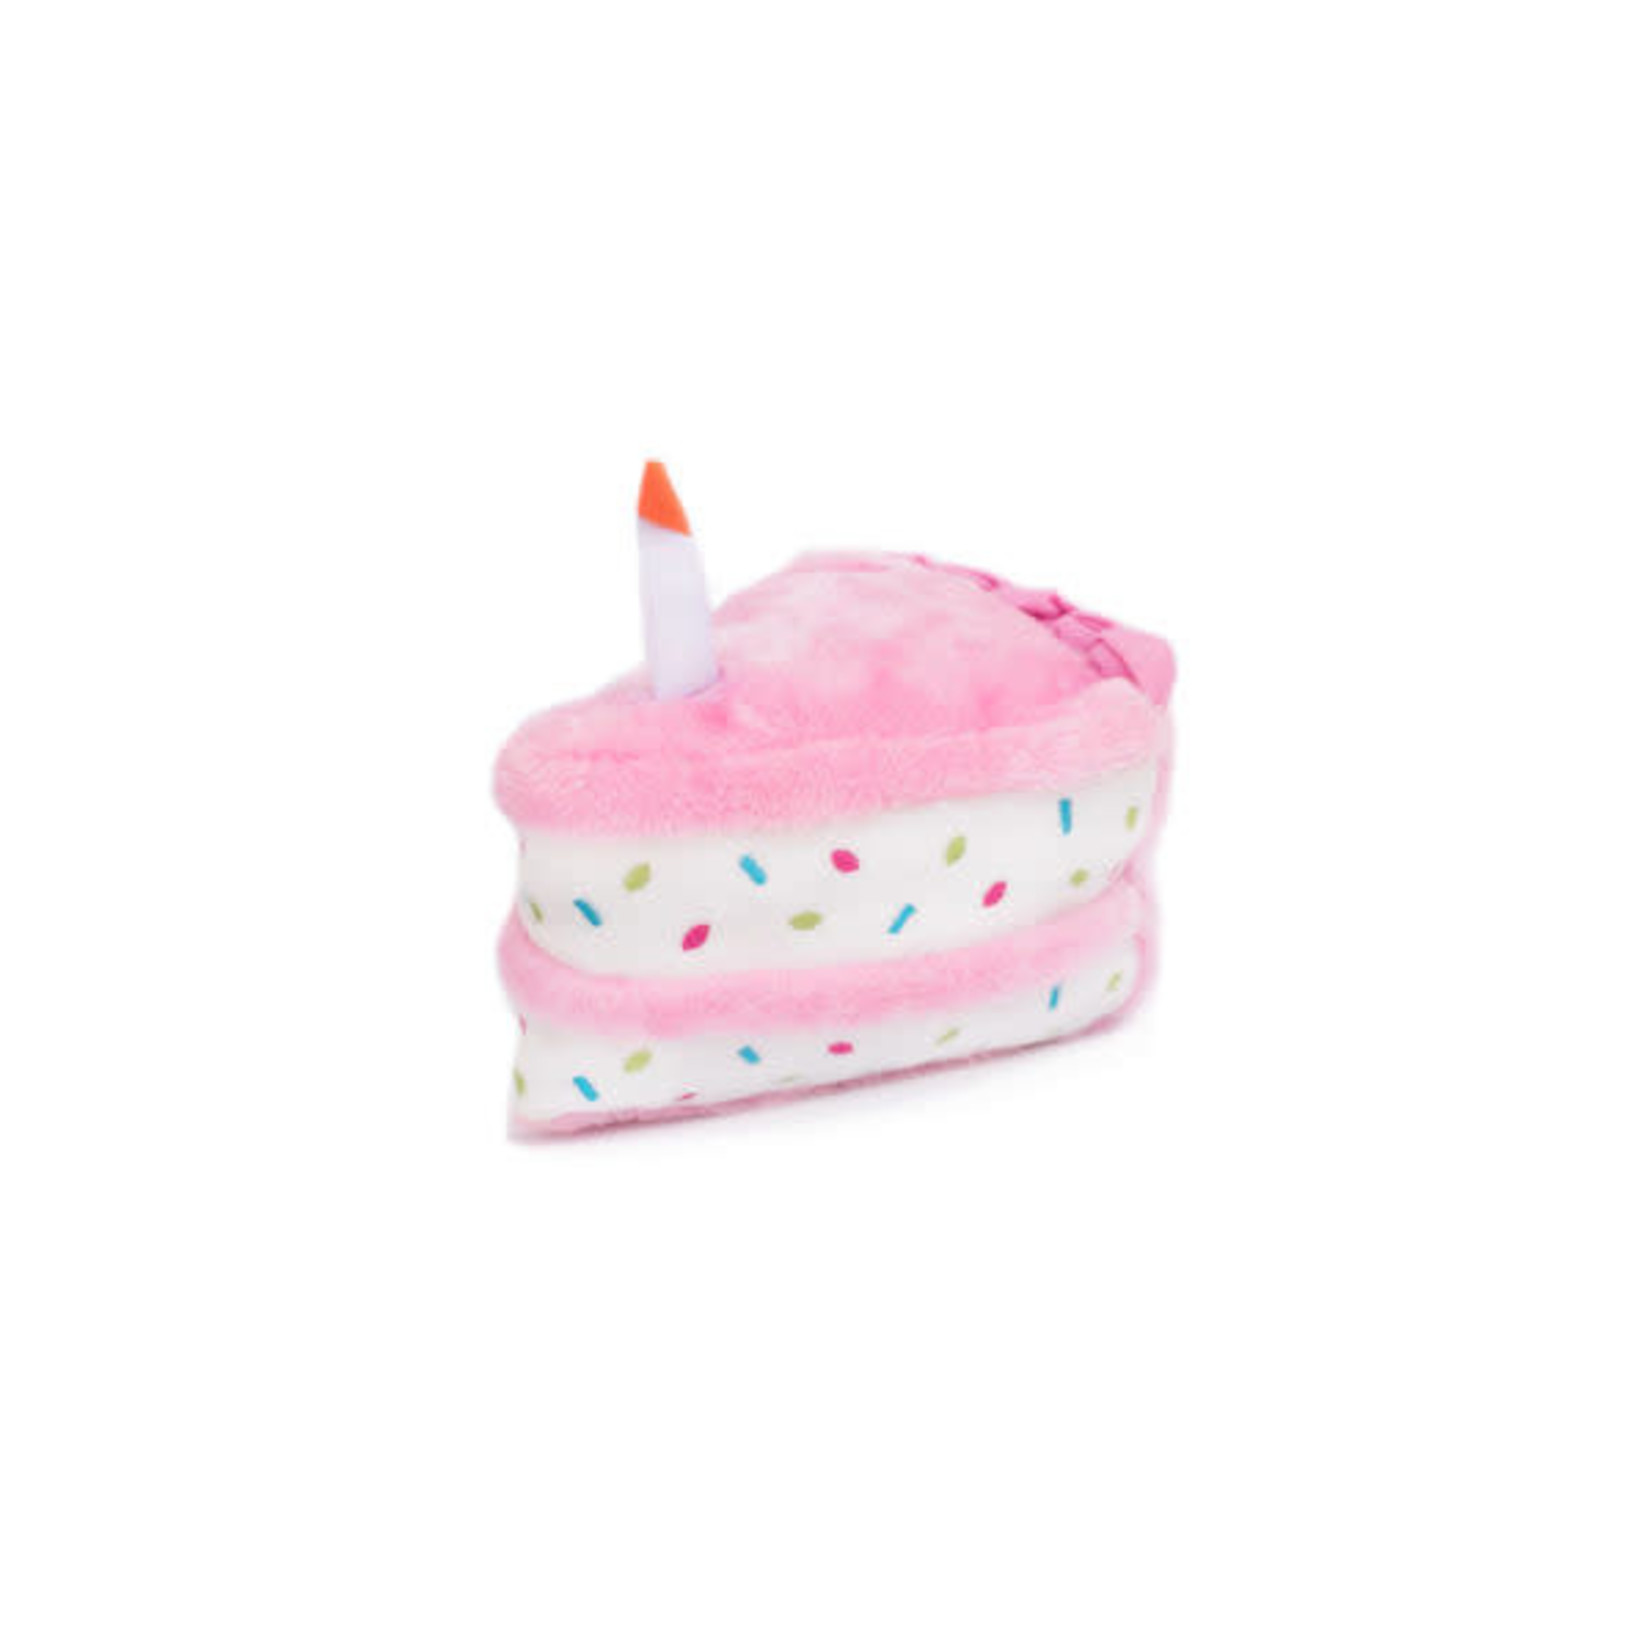 Zippy paws Zippy Paws  Birthday Cake Squeaker Pink